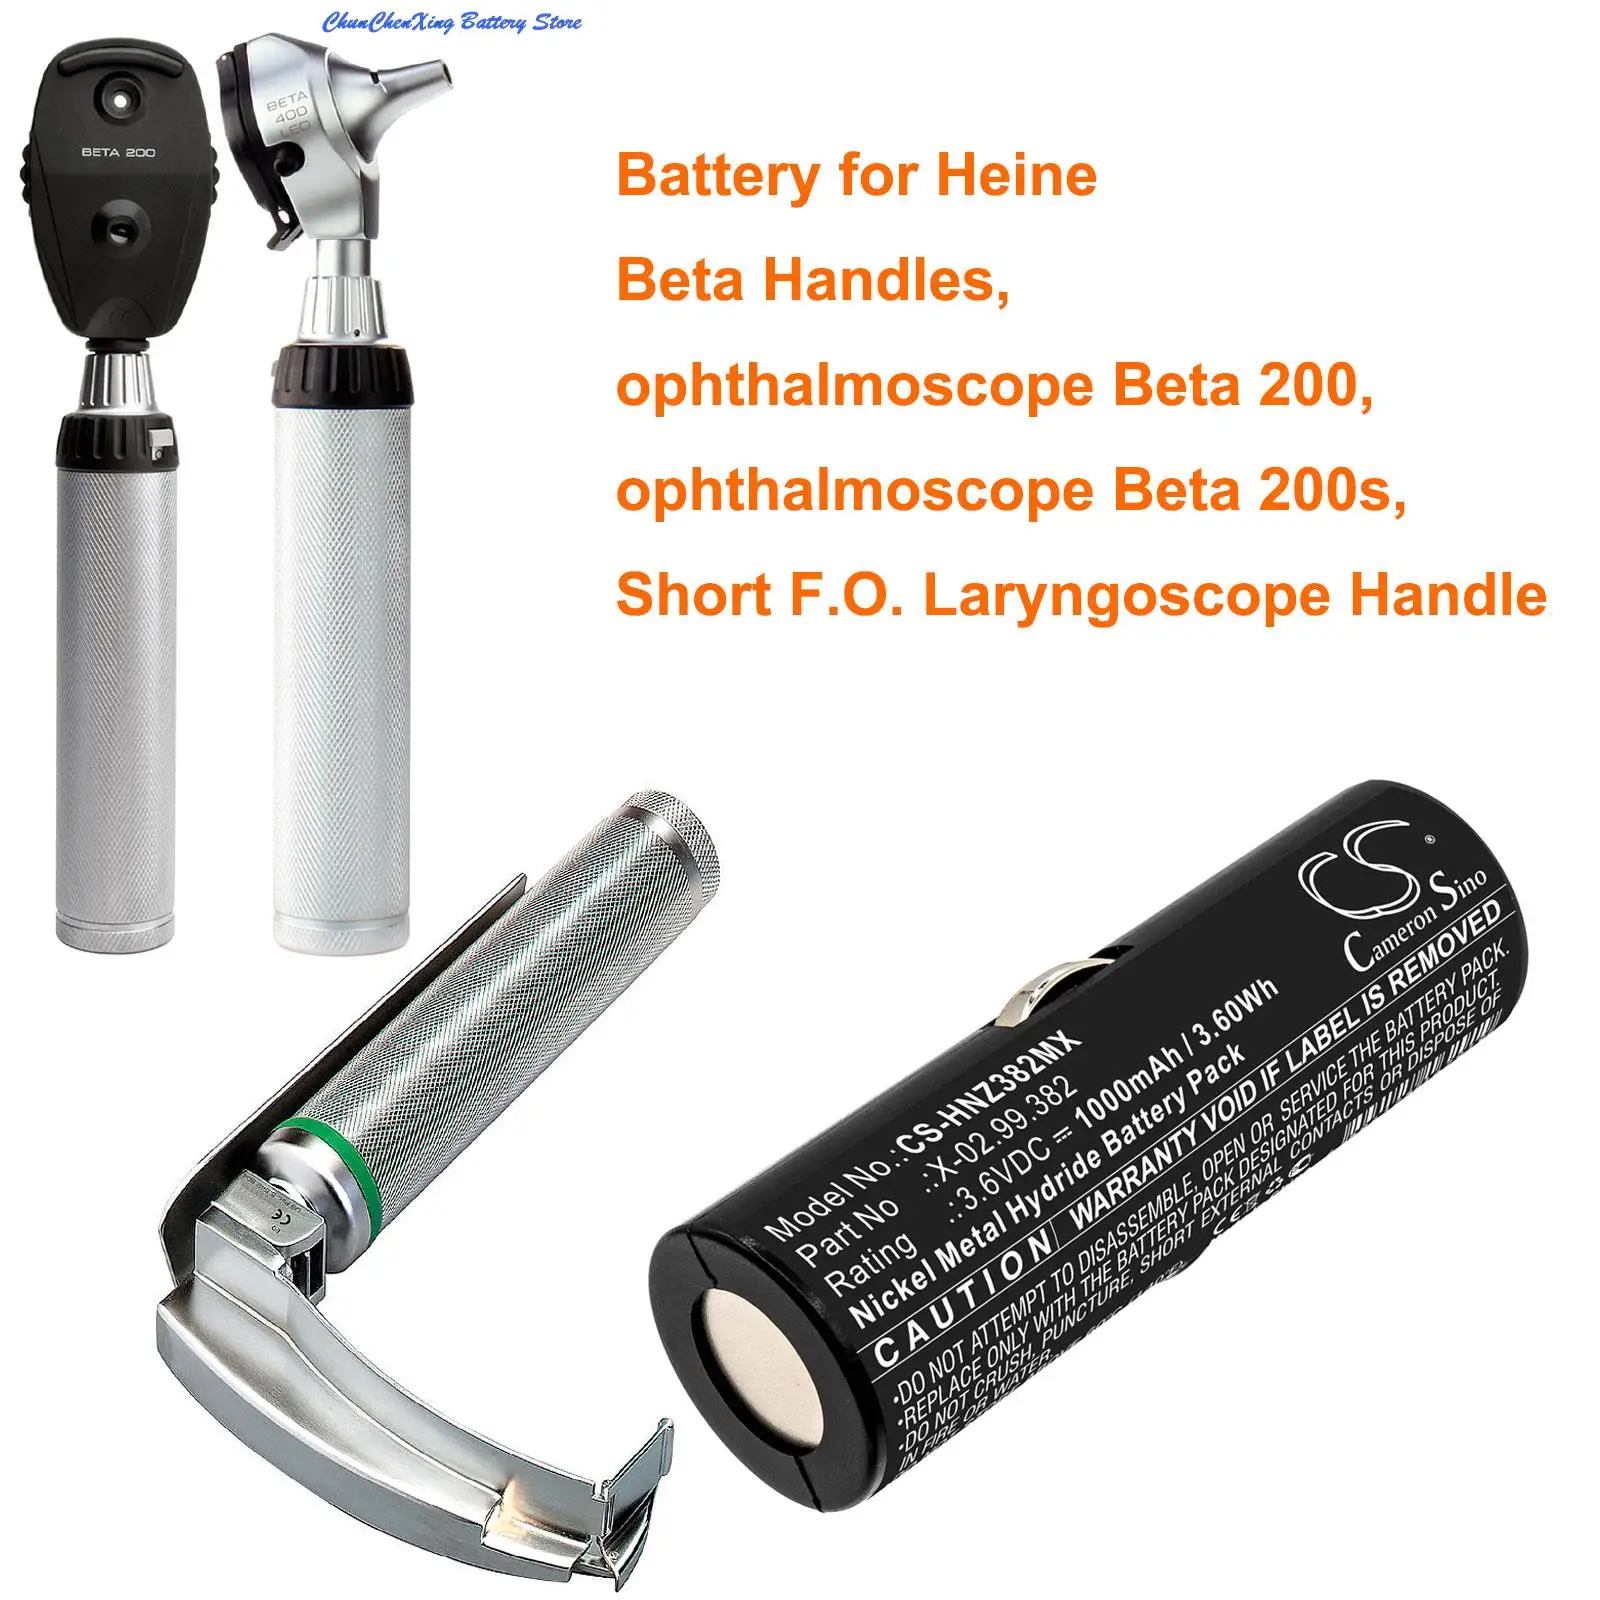 Cameron Sino 1000mAh Battery for Heine Beta Handles, ophthalmoscope Beta 200, Beta 200s, Short F.O. Laryngoscope Handle